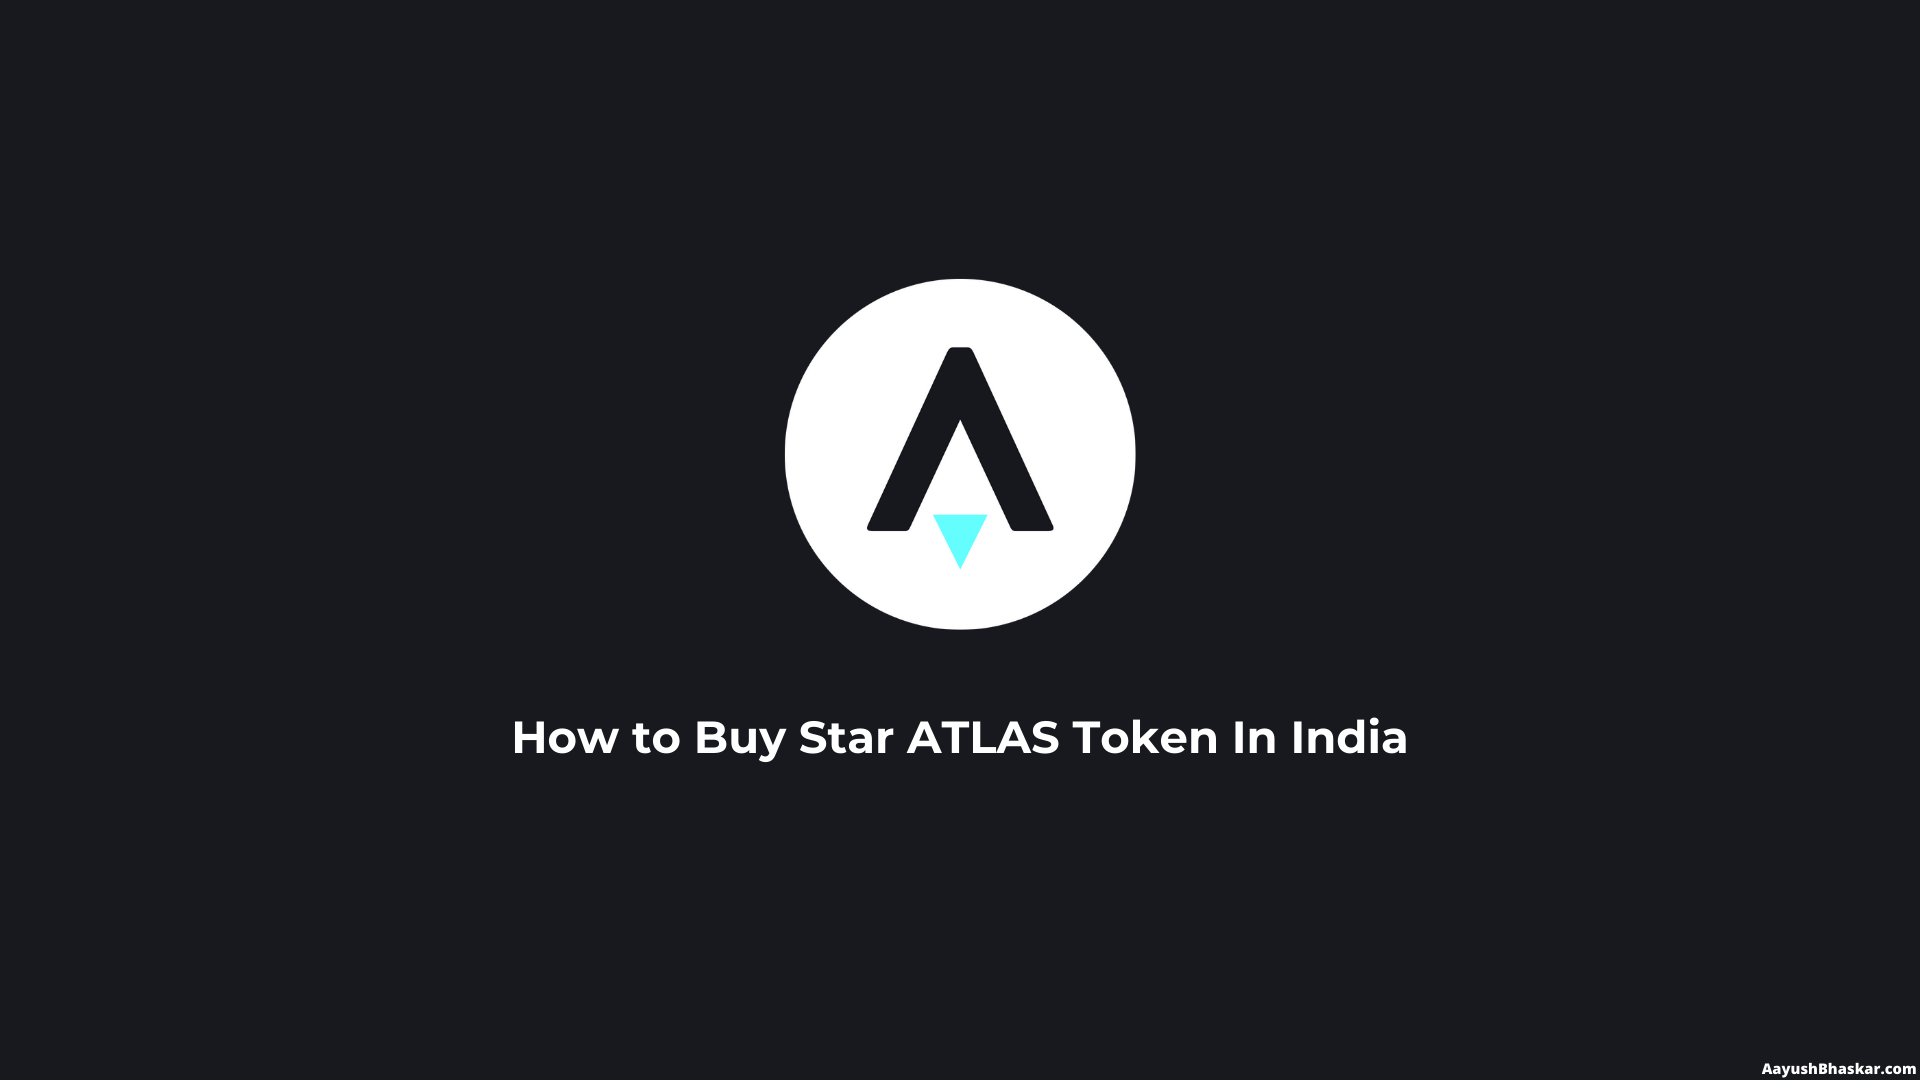 How to Buy Star Atlas (ATLAS) Token in India - Aayush Bhaskar